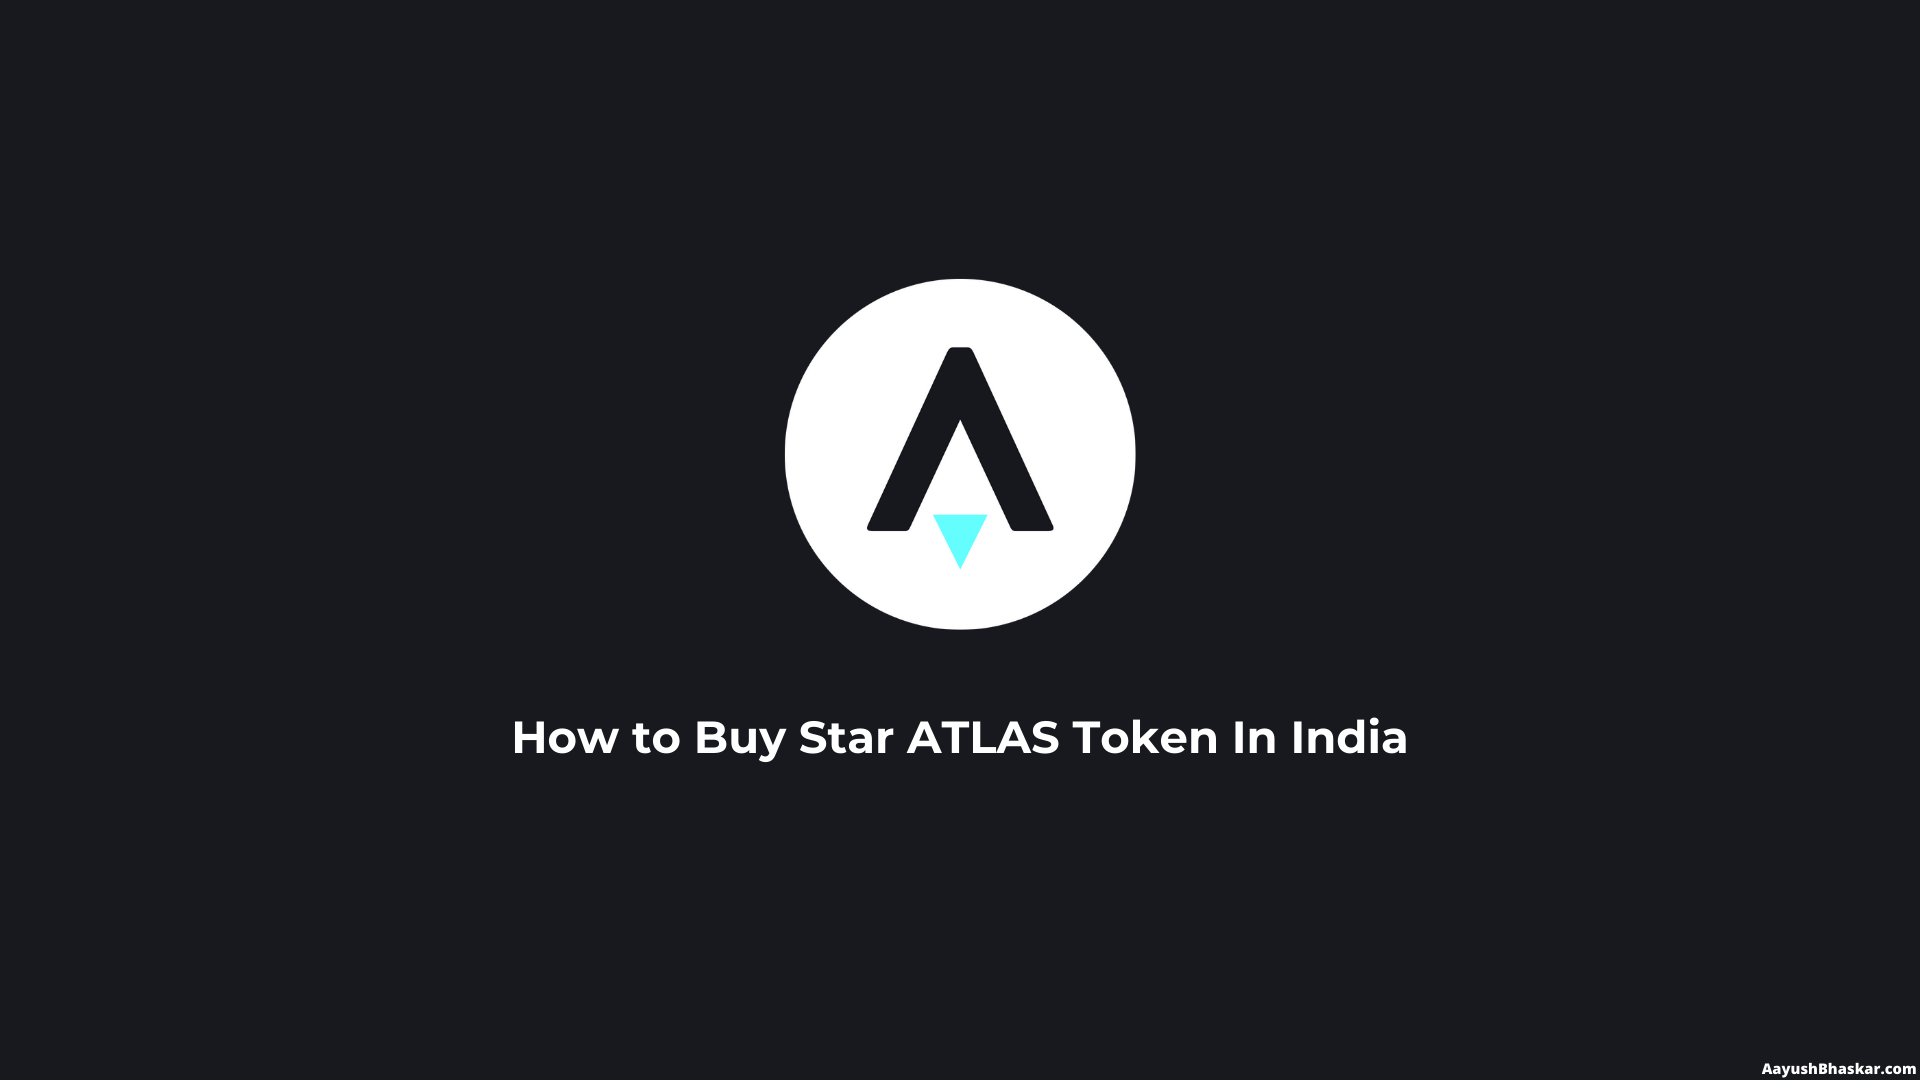 How to Buy Star Atlas (ATLAS) Token in India - Aayush Bhaskar